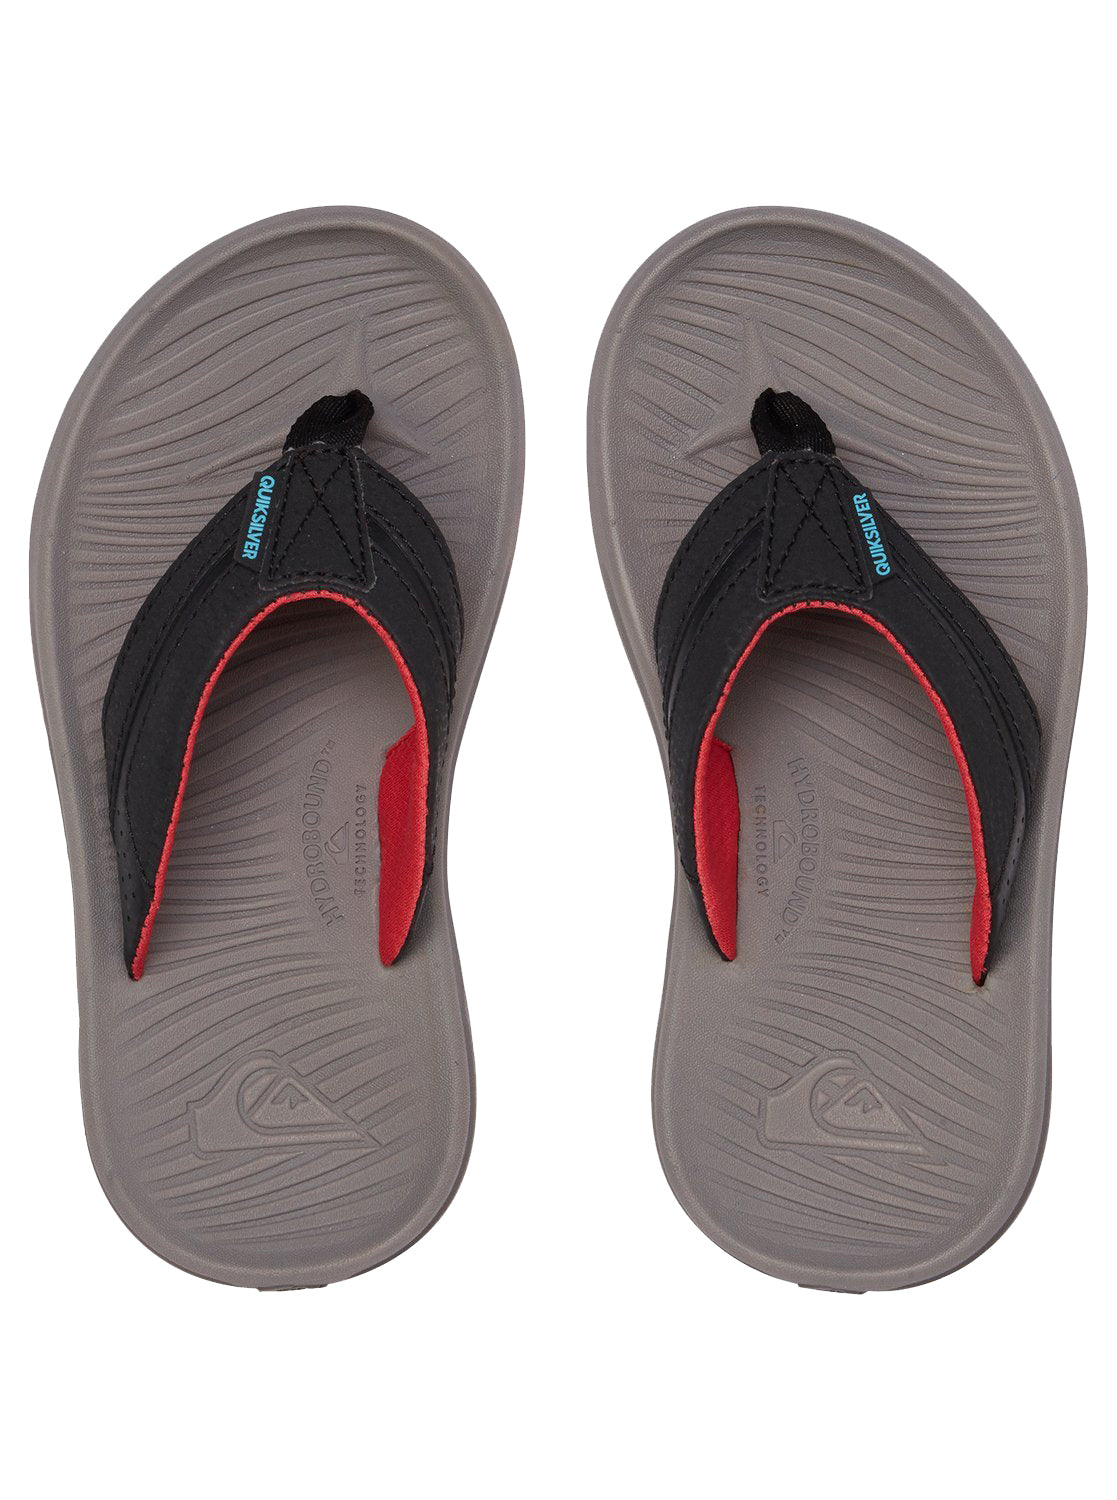 Quiksilver Oasis Youth Sandals XKSR-Black-Grey-Red 13 C